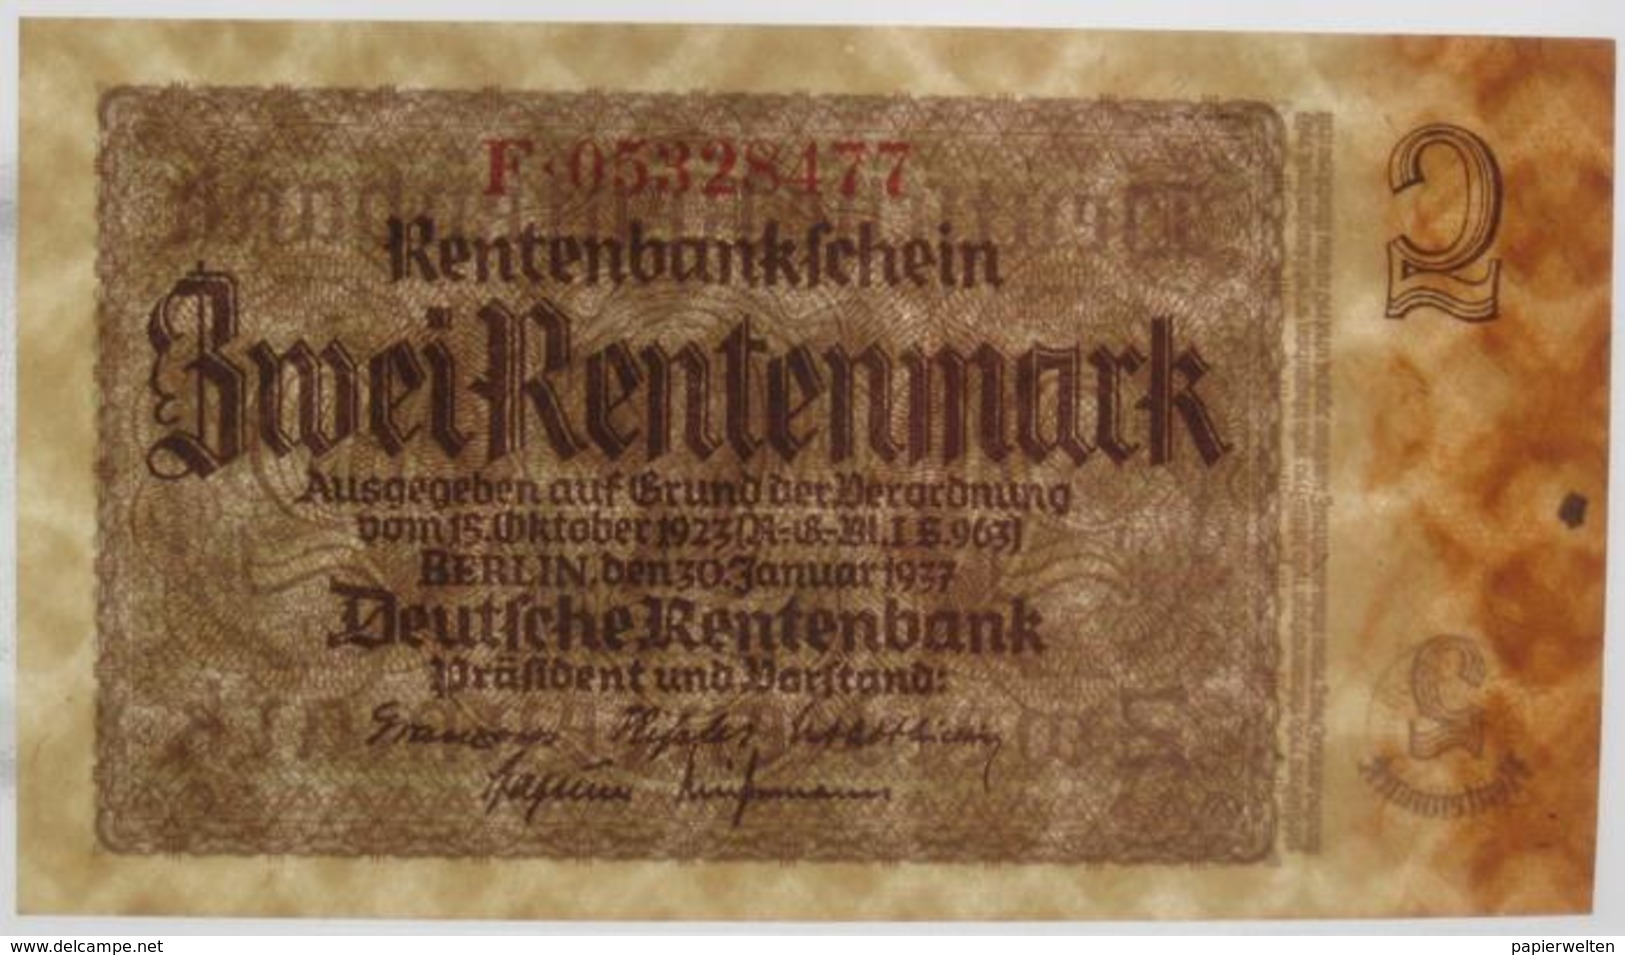 2 Rentenmark 30.1.1937 (WPM 174) "Papiereinschluss" - 2 Rentenmark